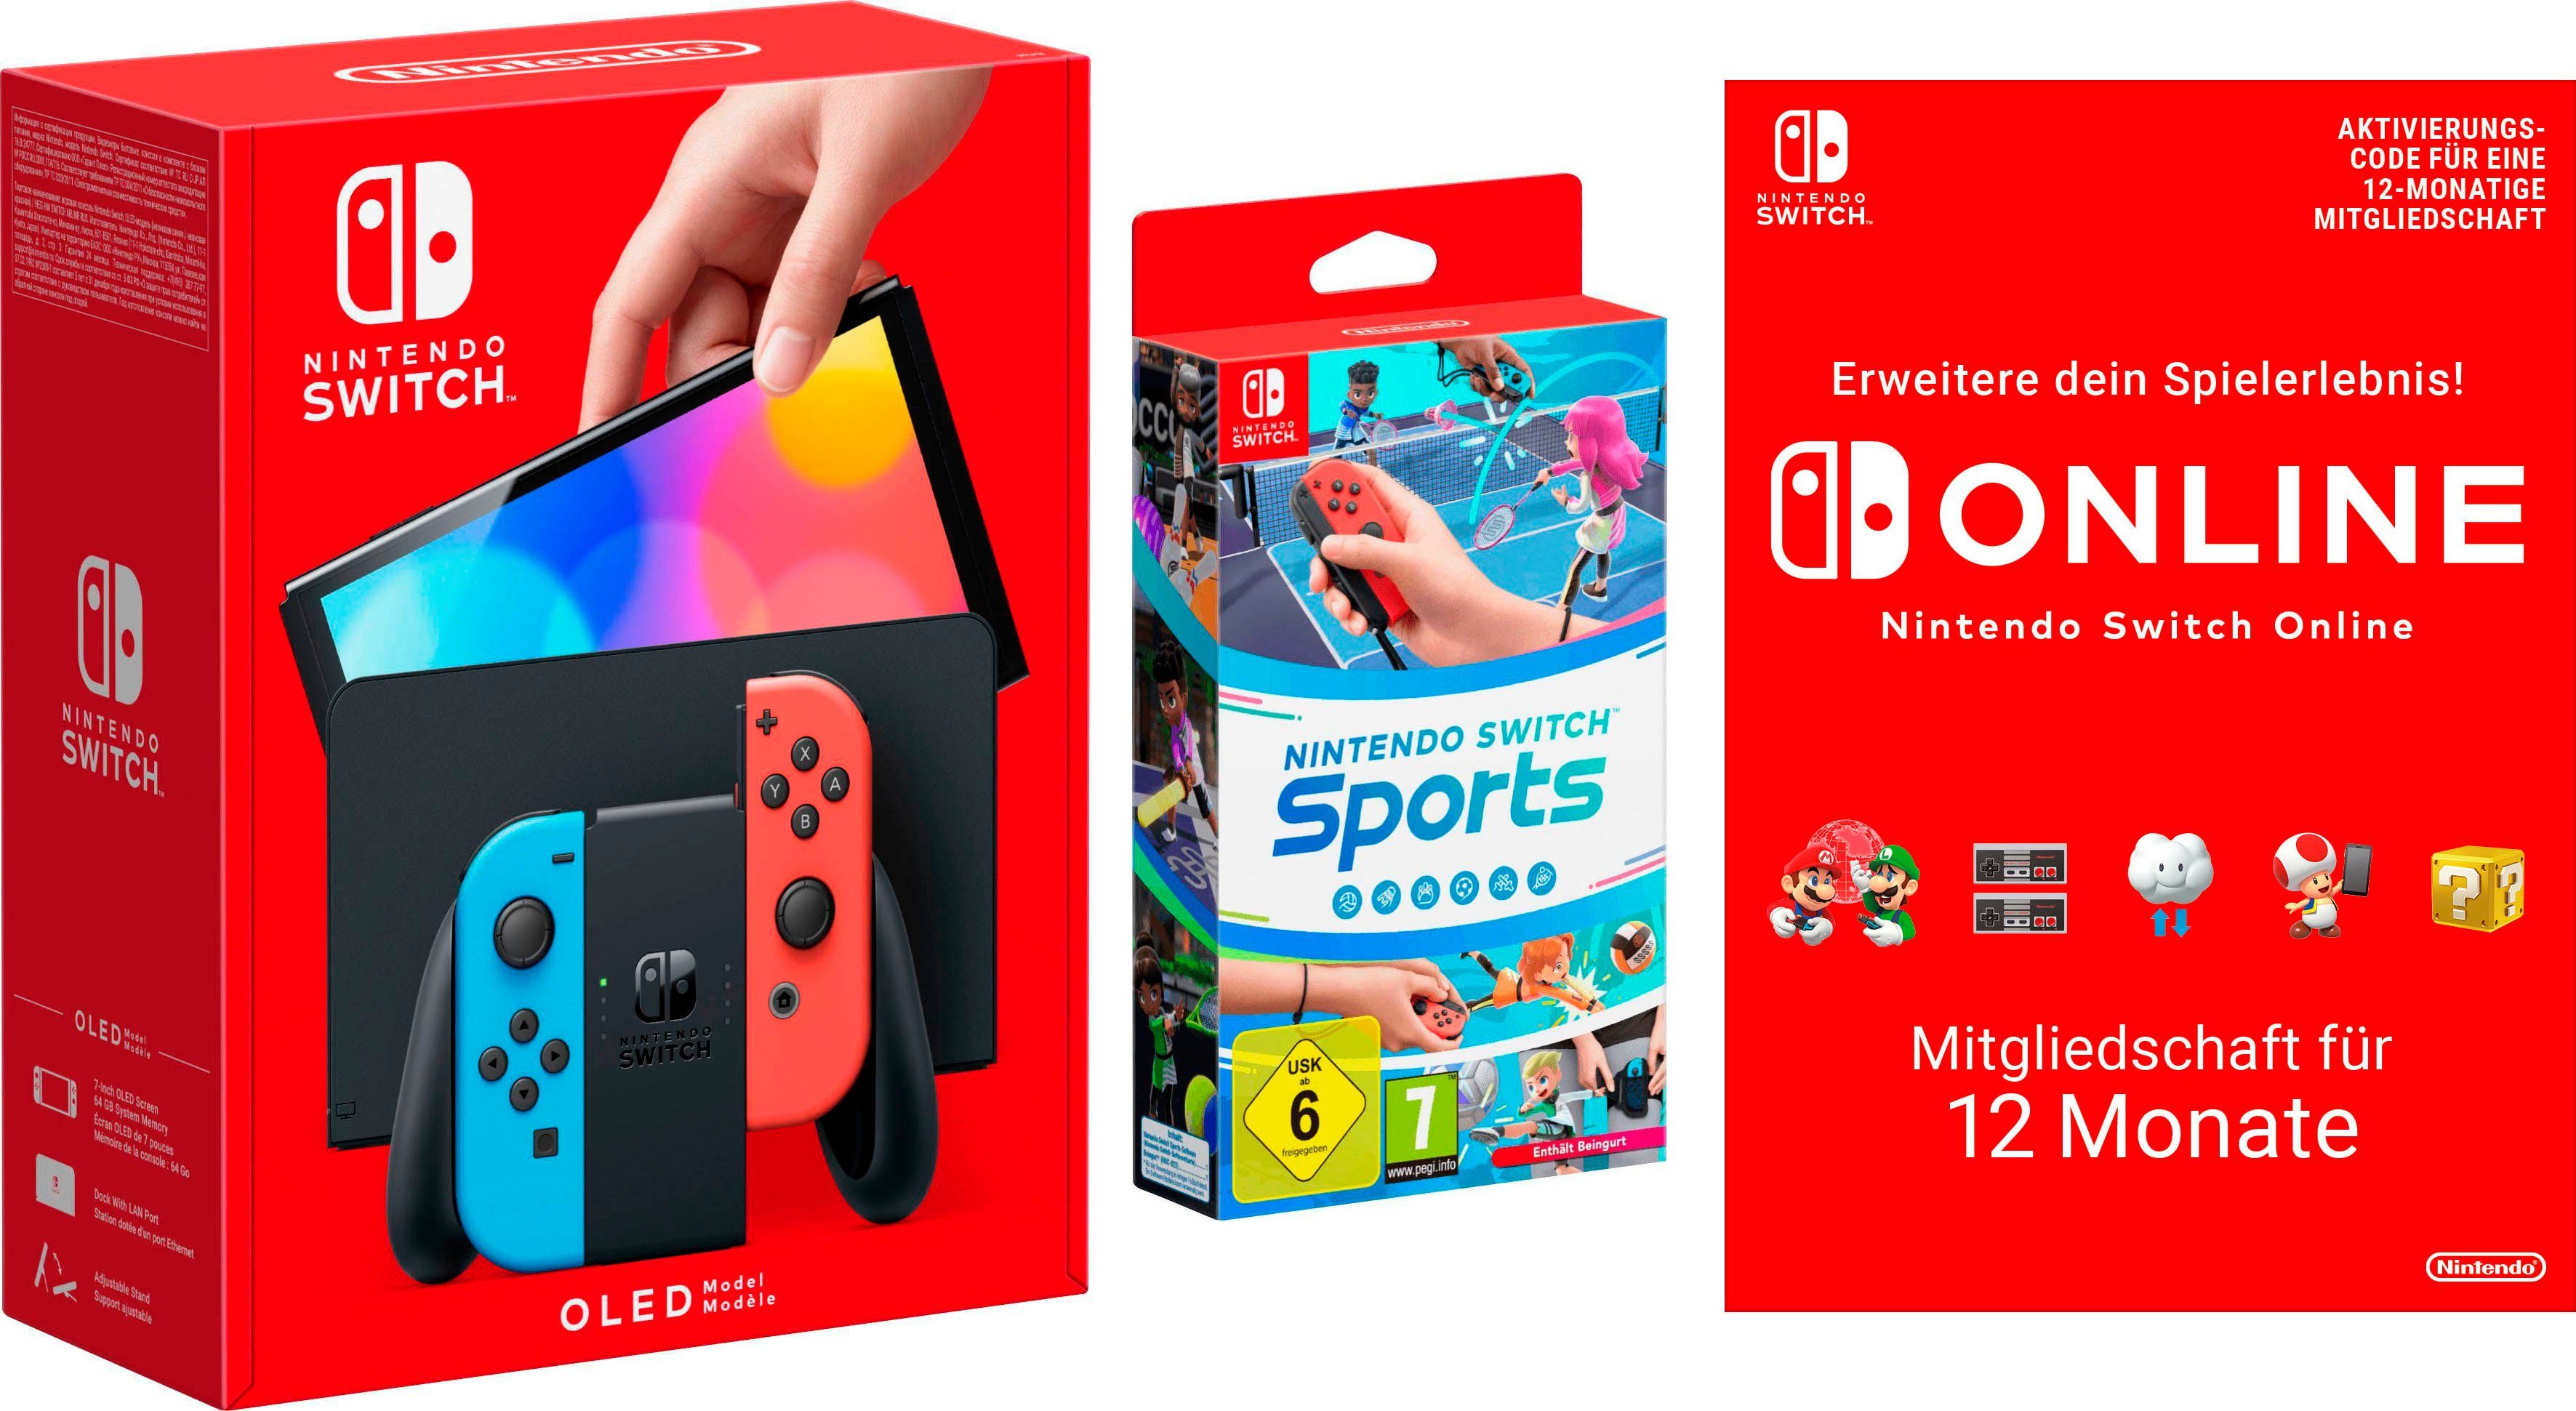 Nintendo Switch NSO Switch Monate Sports Code und inkl. 12 Switch OLED